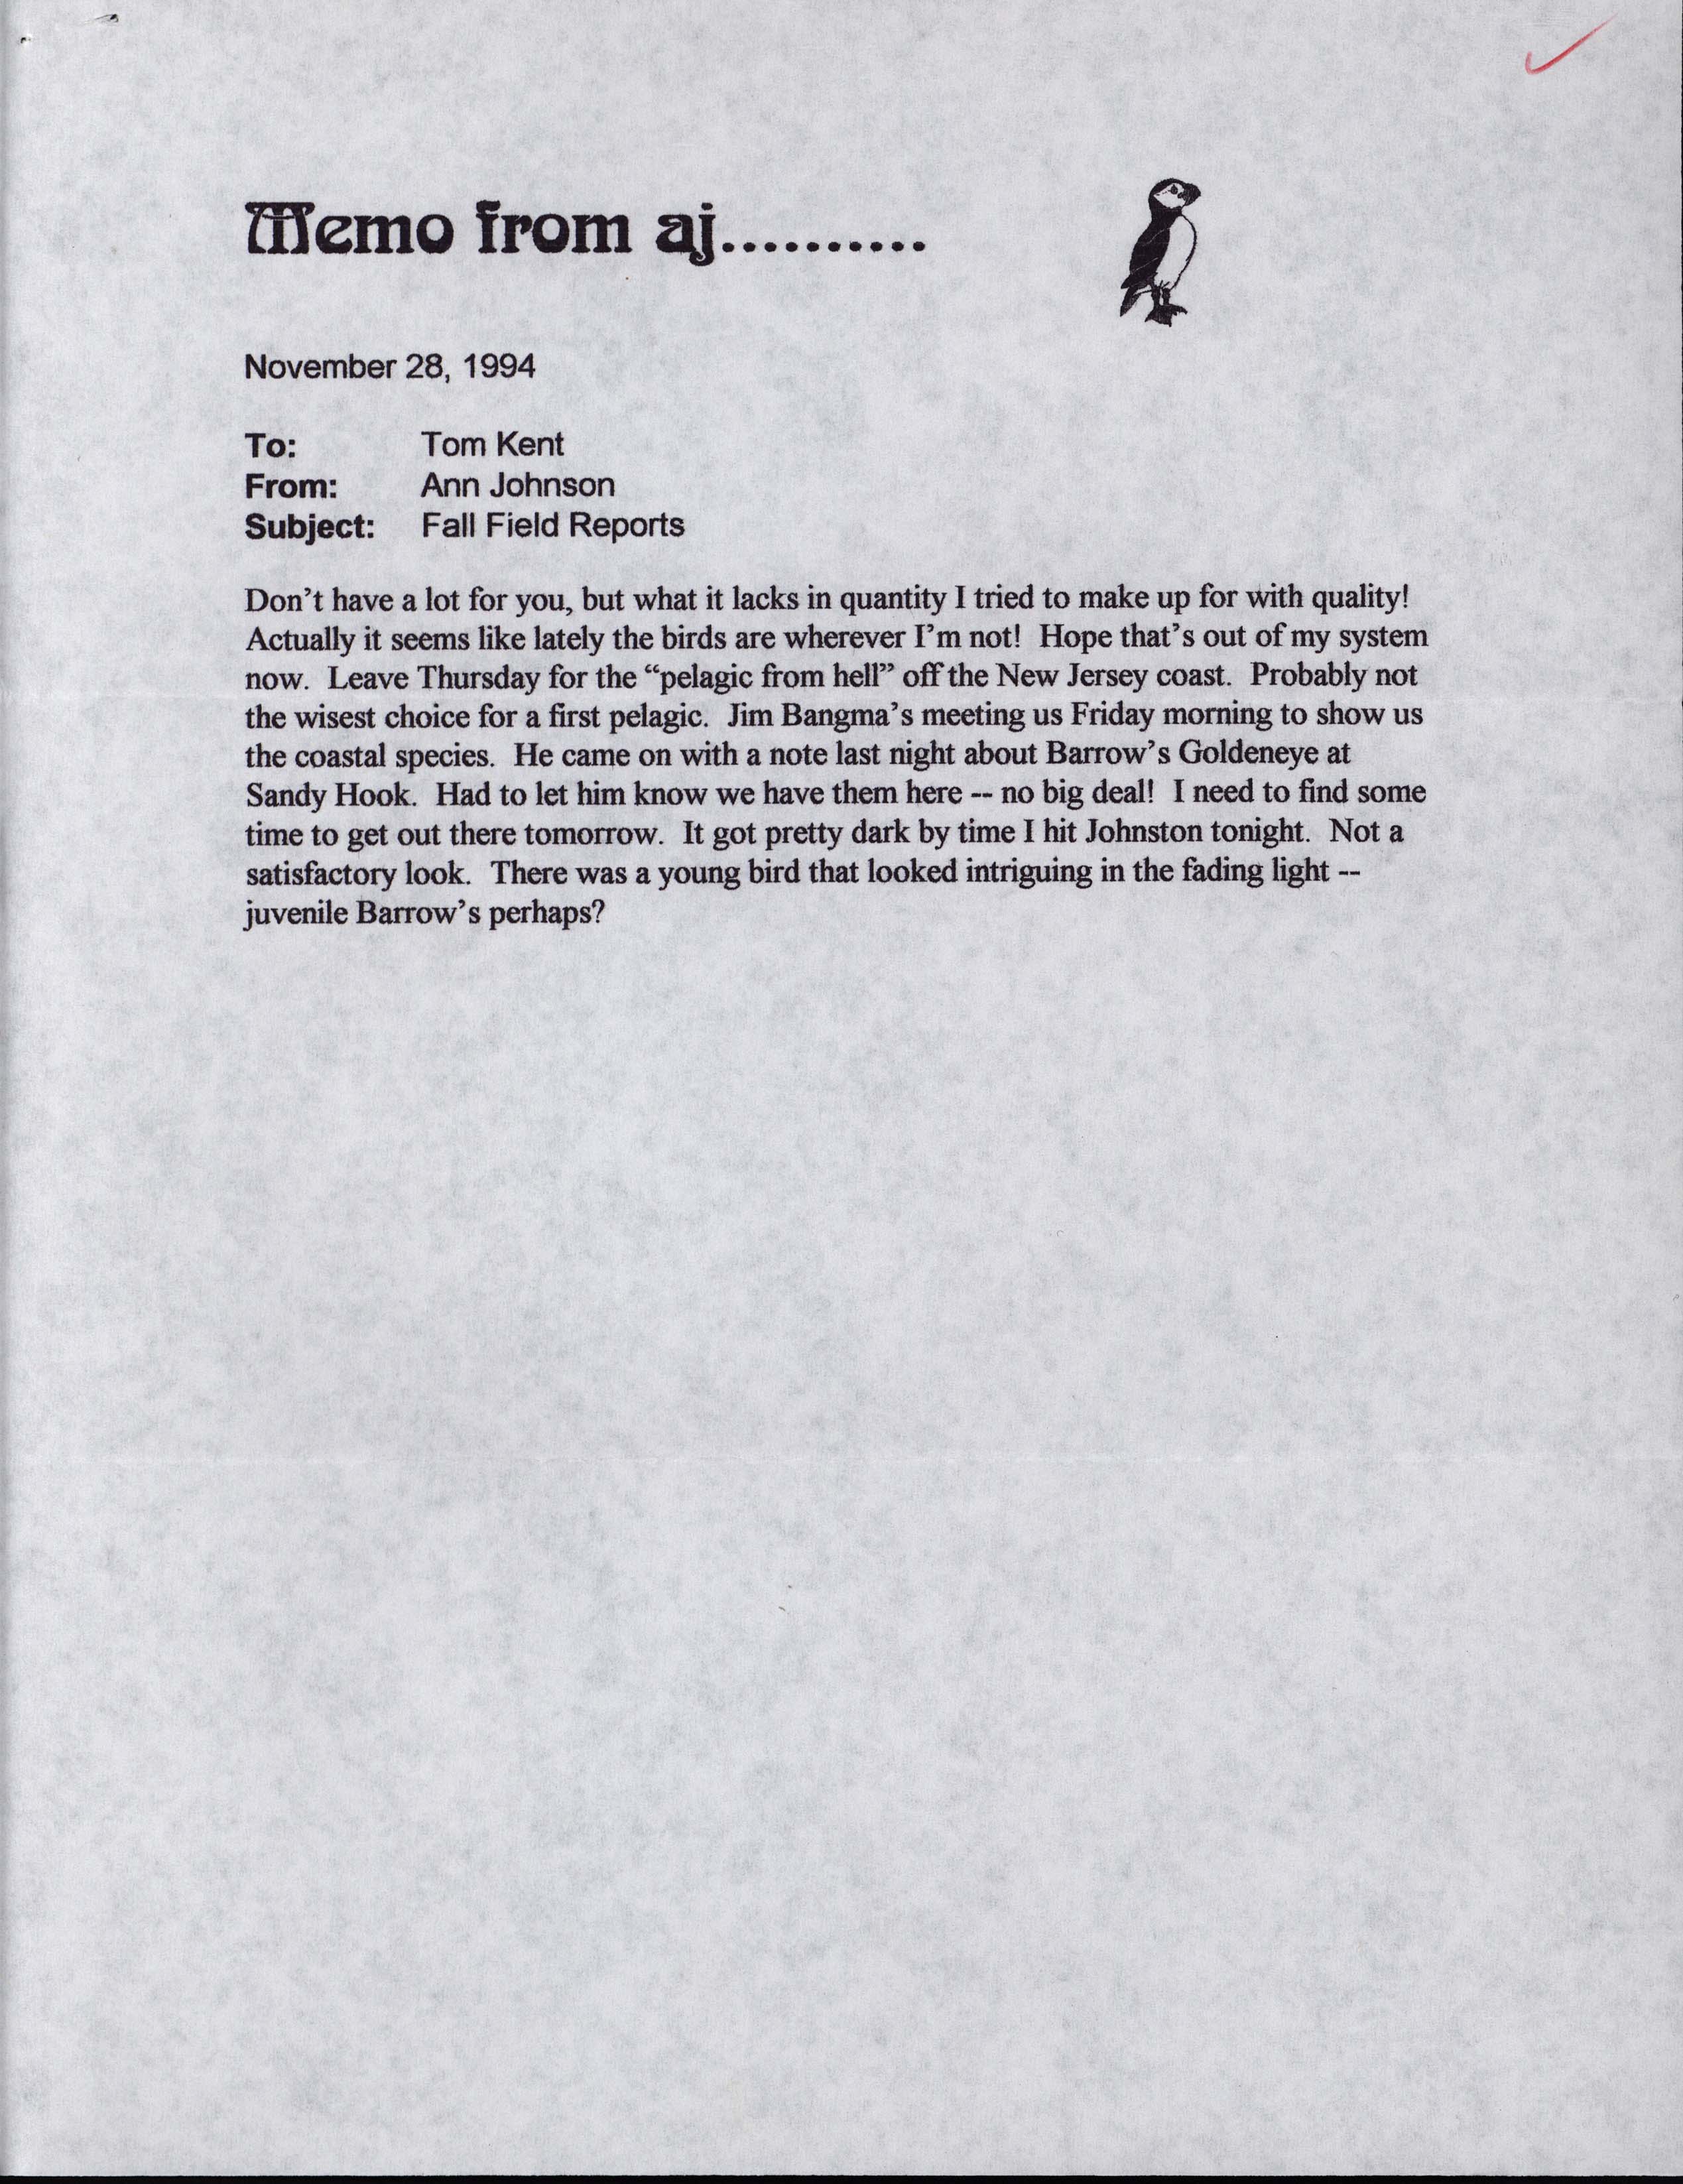 Ann Johnson letter to Thomas Kent regarding fall field reports, November 28, 1994